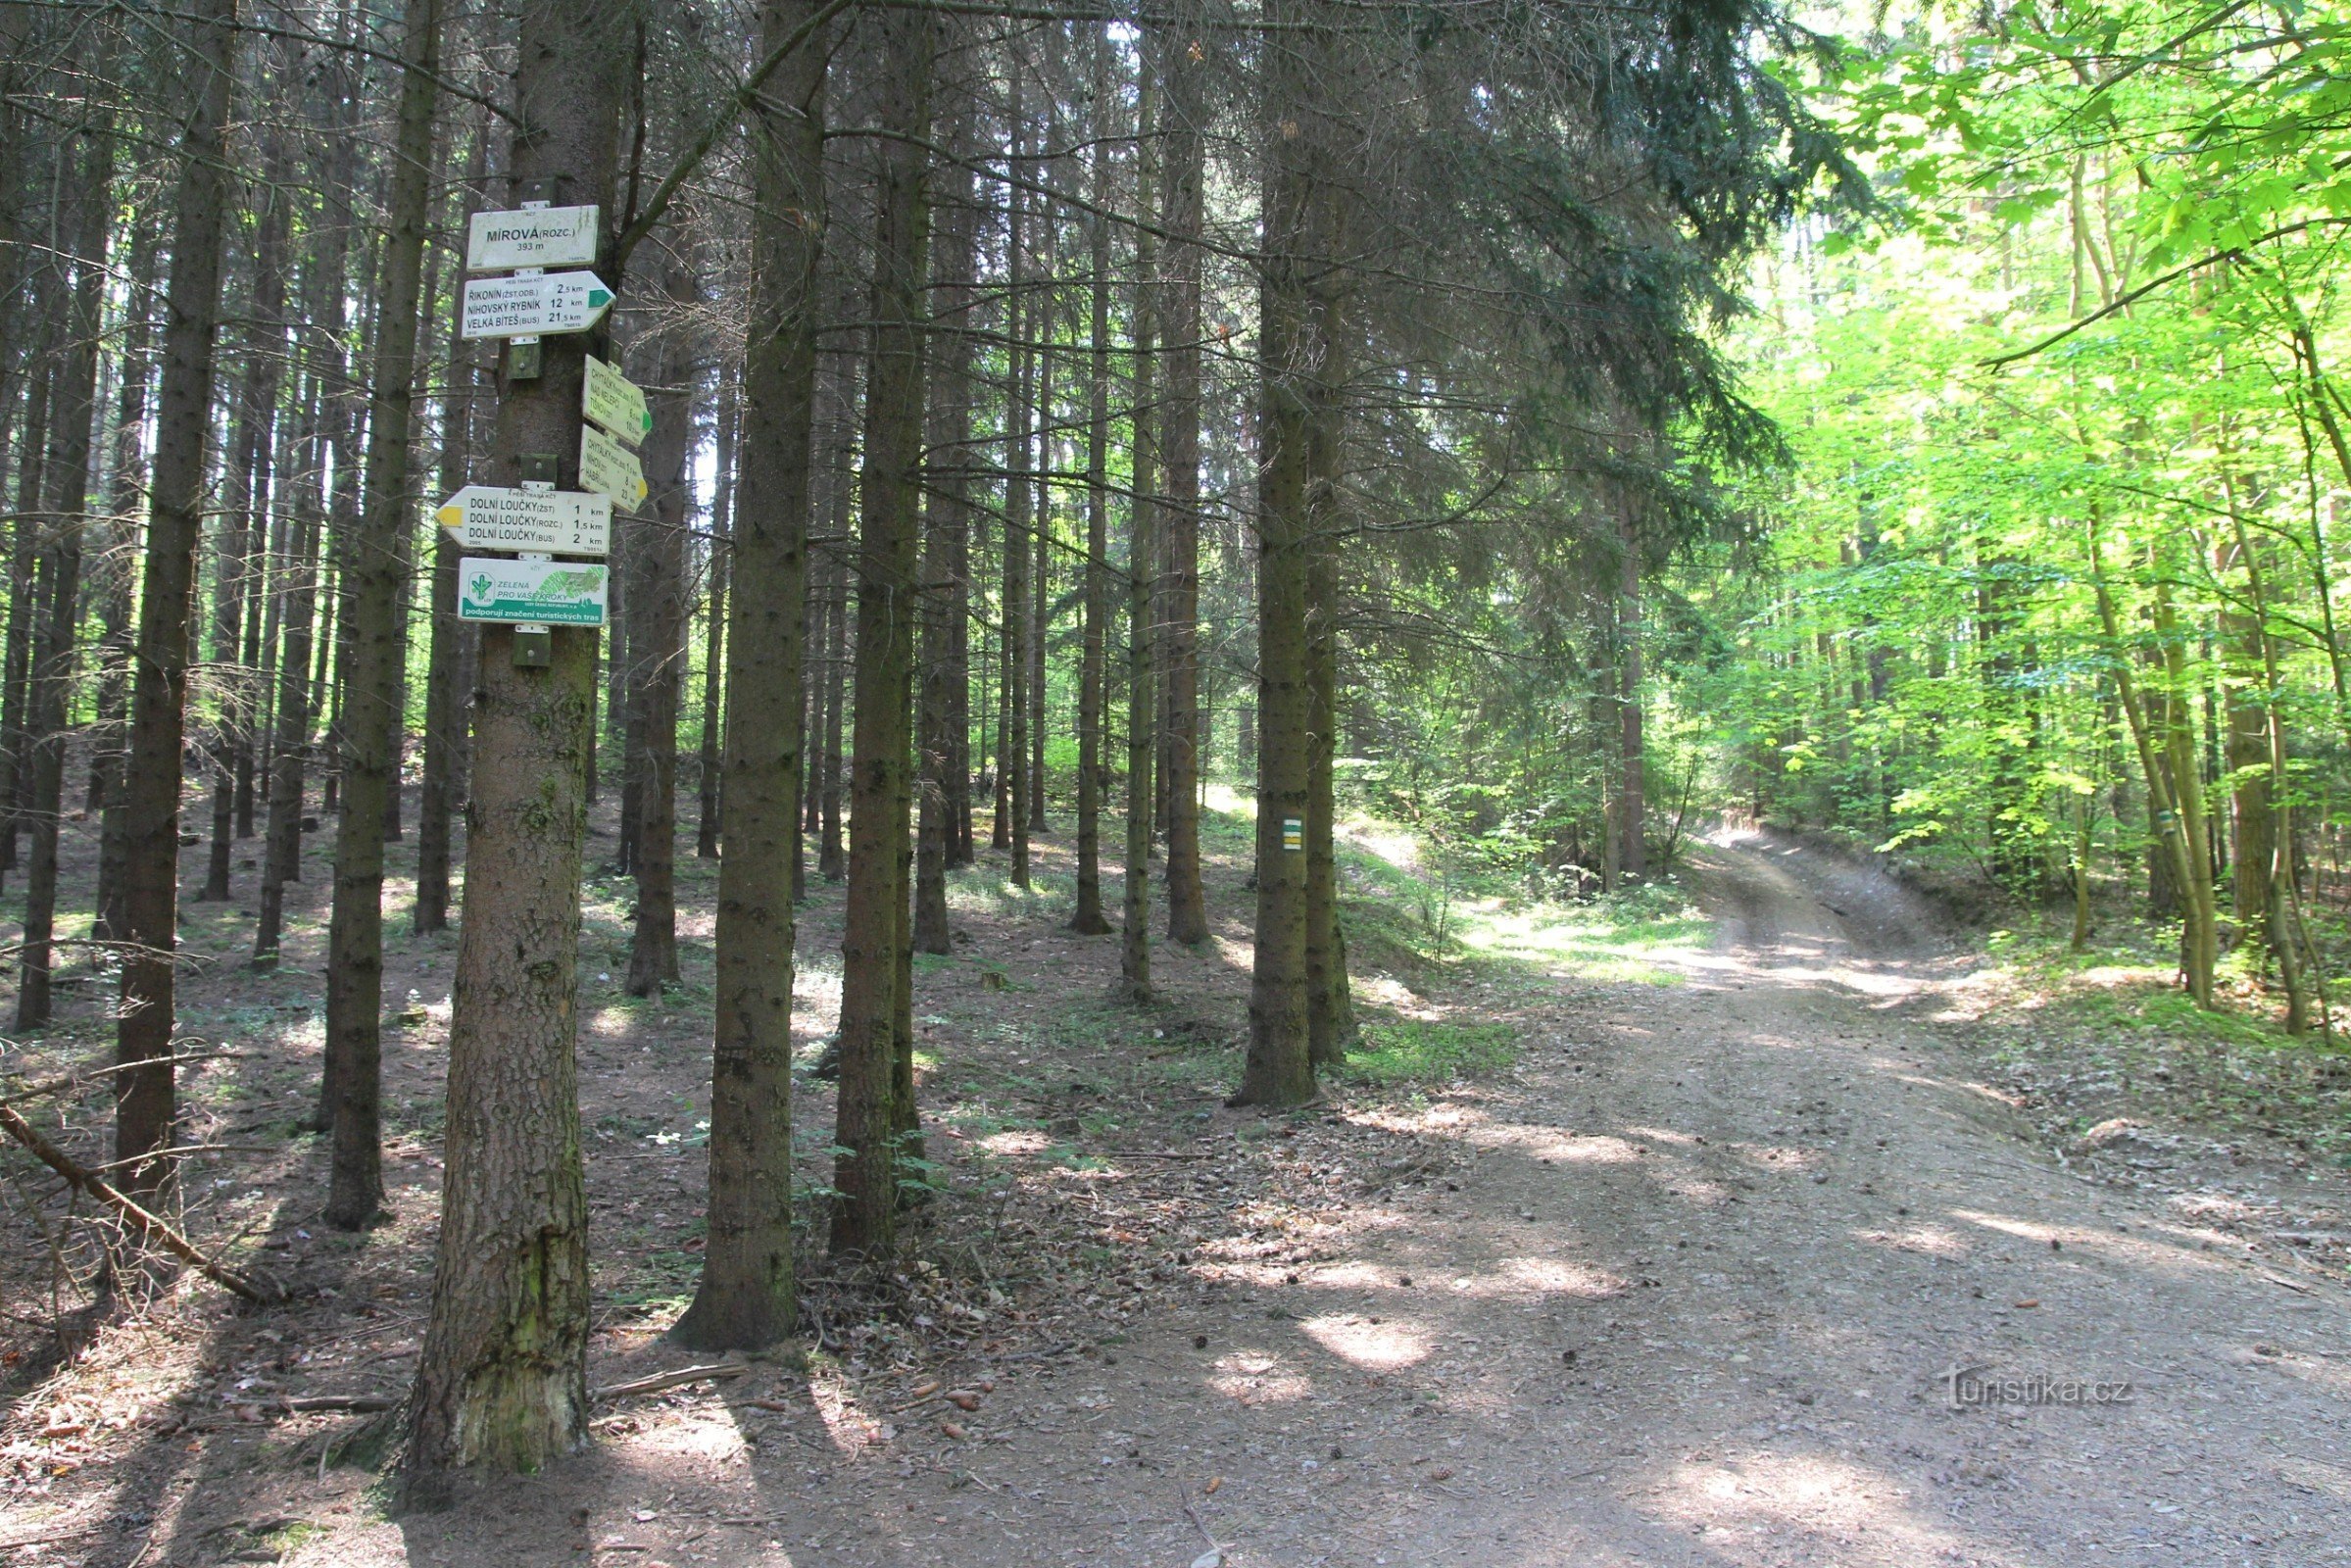 Răscruce turistică Mírová pe semne verzi și galbene